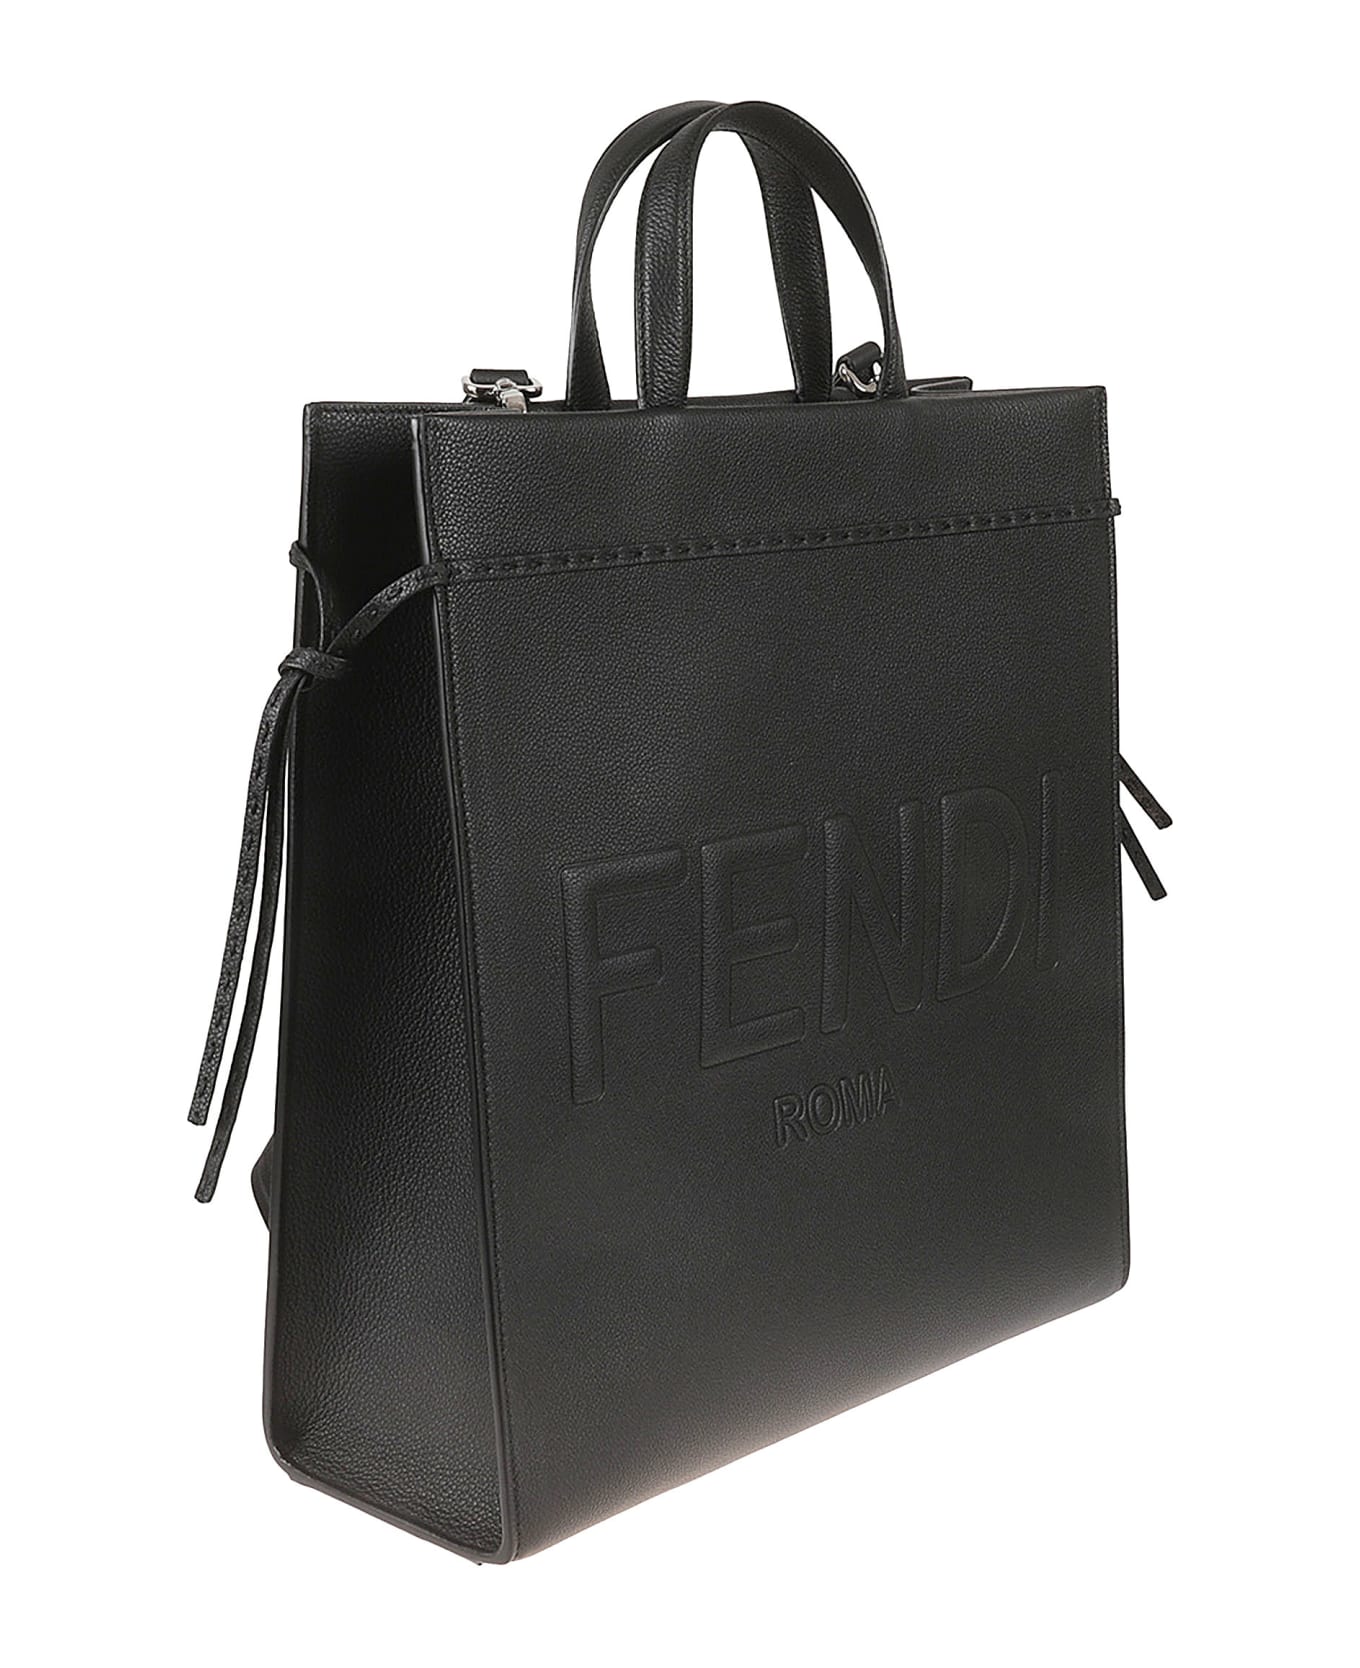 Fendi Go To Shopper Crossbody Bag - Black/Palladio